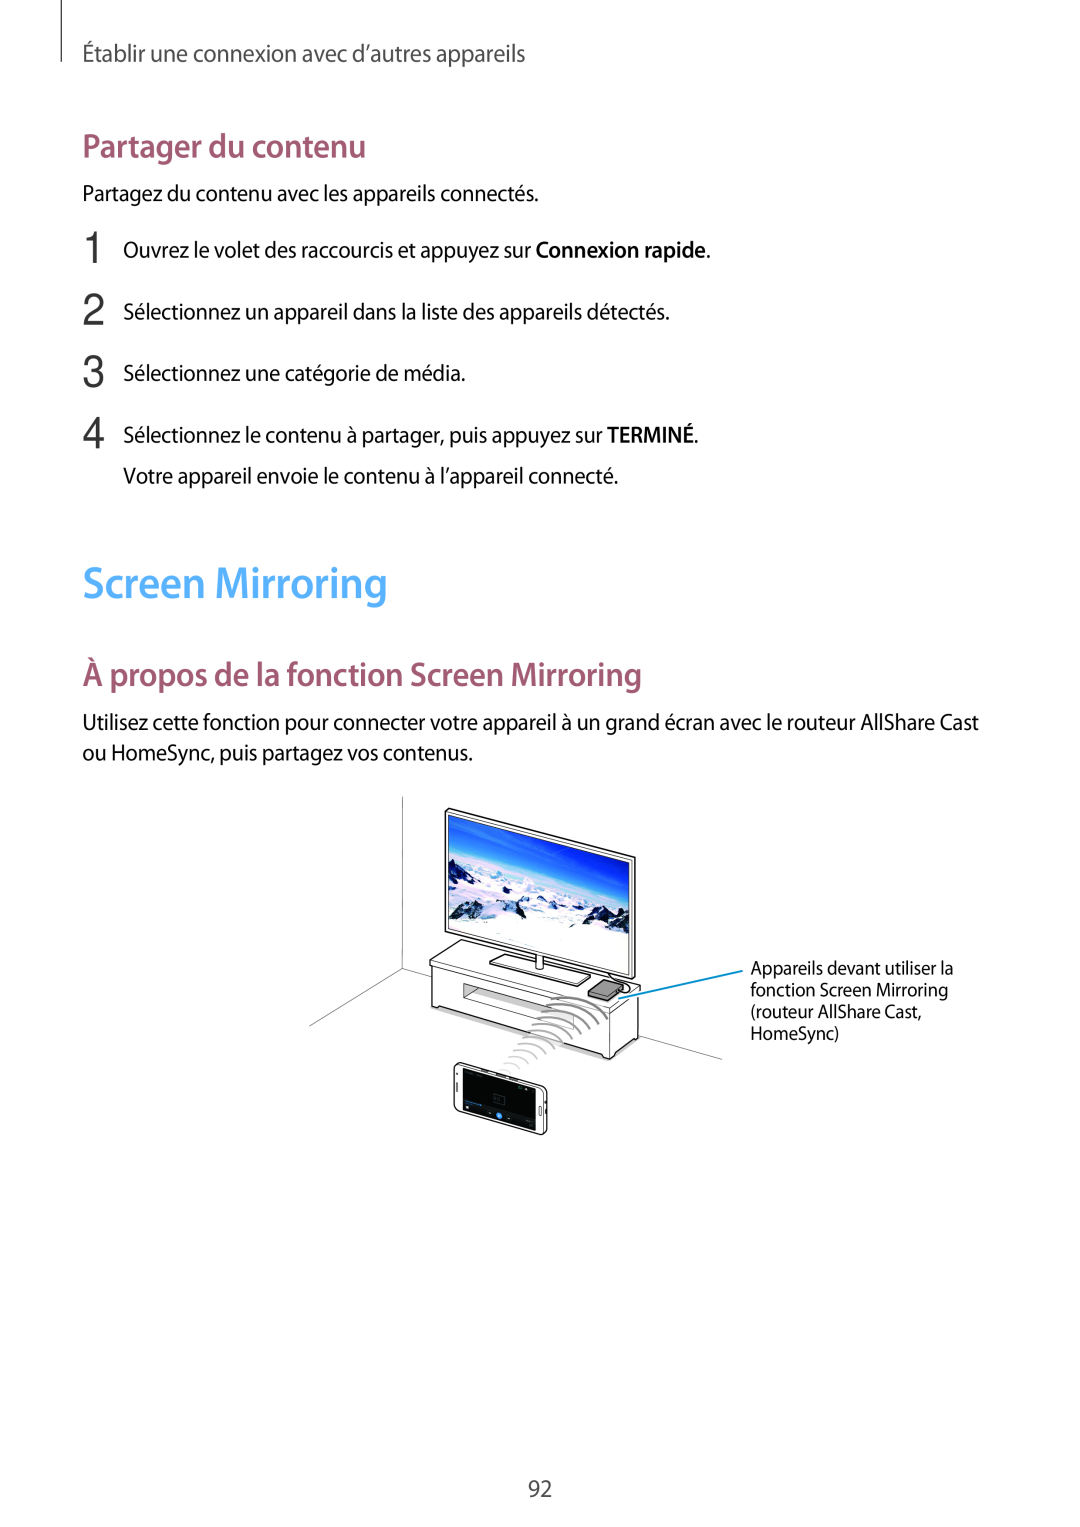 Samsung SM-A300FZWUFTM, SM-A300FZSUXEF, SM-A300FZKUBOG Partager du contenu, À propos de la fonction Screen Mirroring 